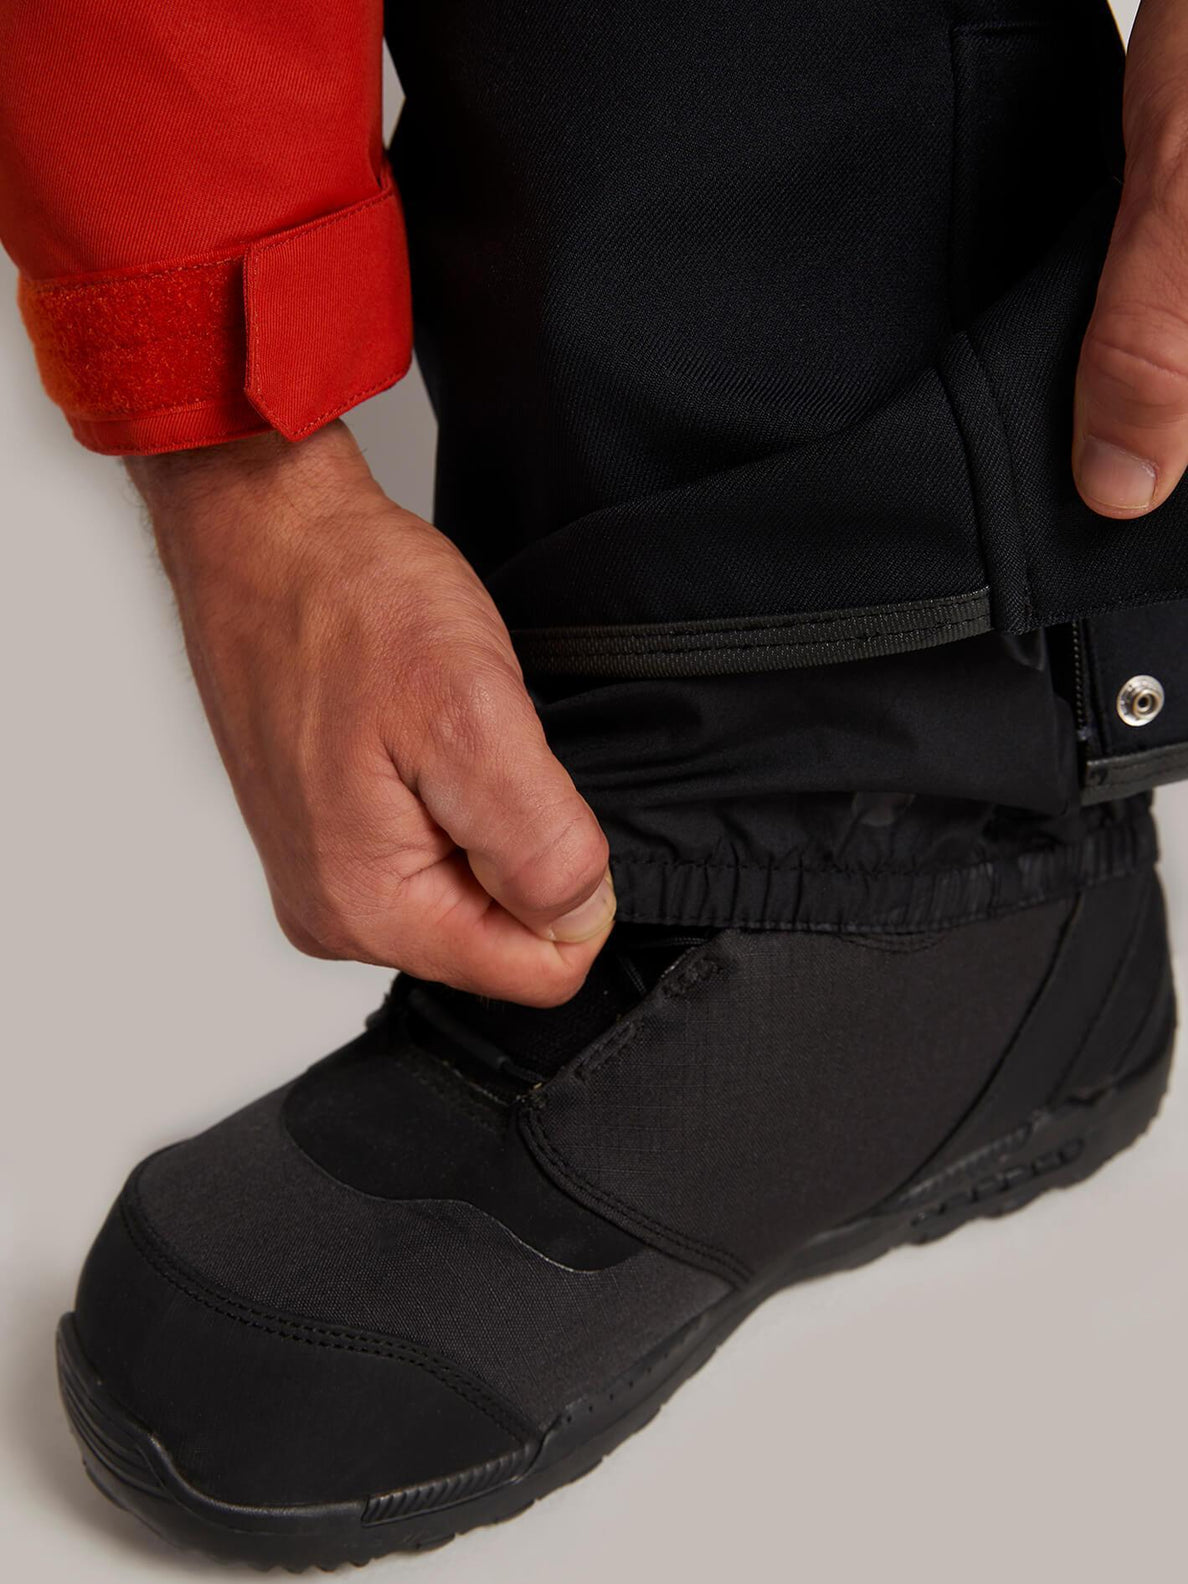 Pantalones De Nieve Articulated - Black